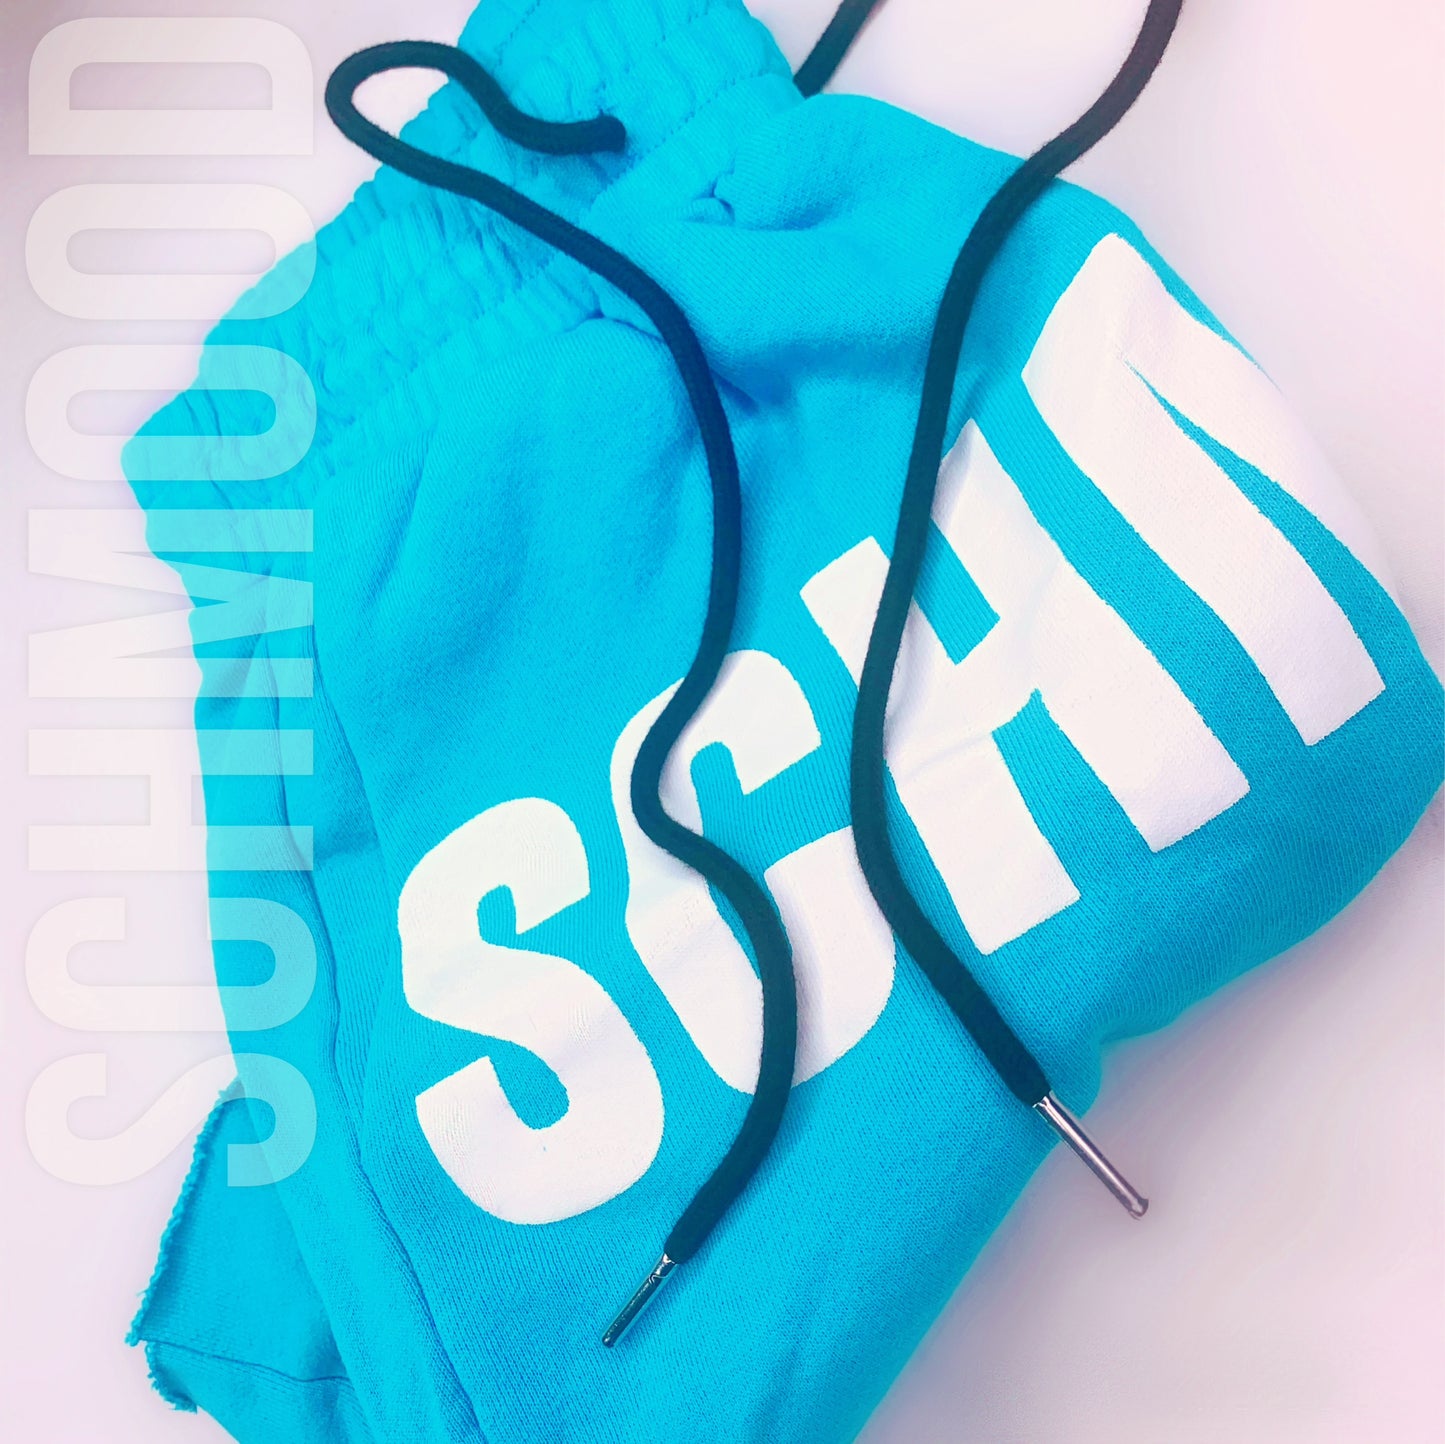 SCHMOOD Sweat Shorts - Blue Turquoise/White/Black